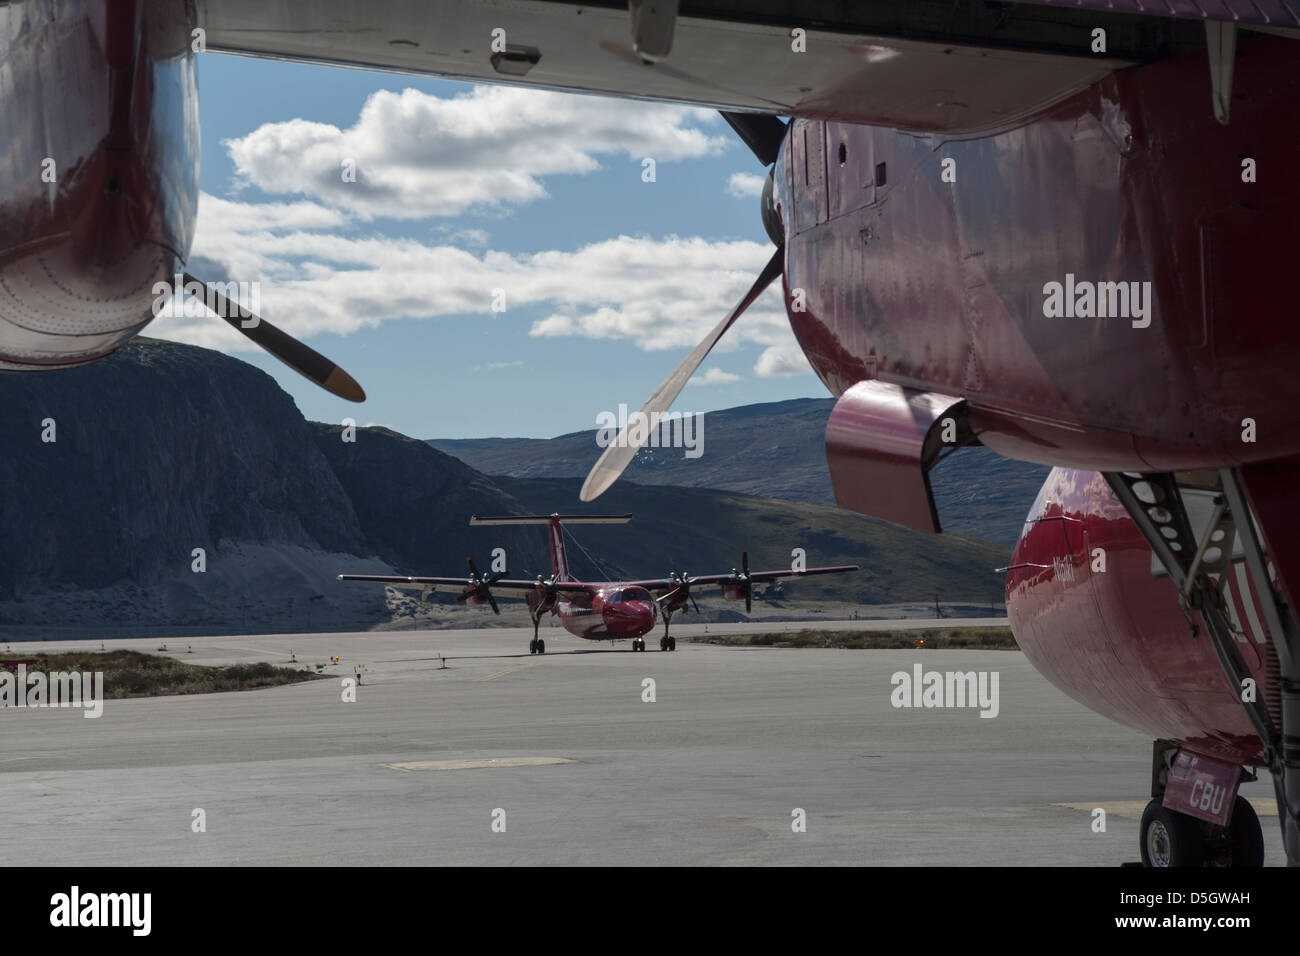 Air Greenland aeroplane on the runway, Kangerlussuaq, Greenland Stock Photo